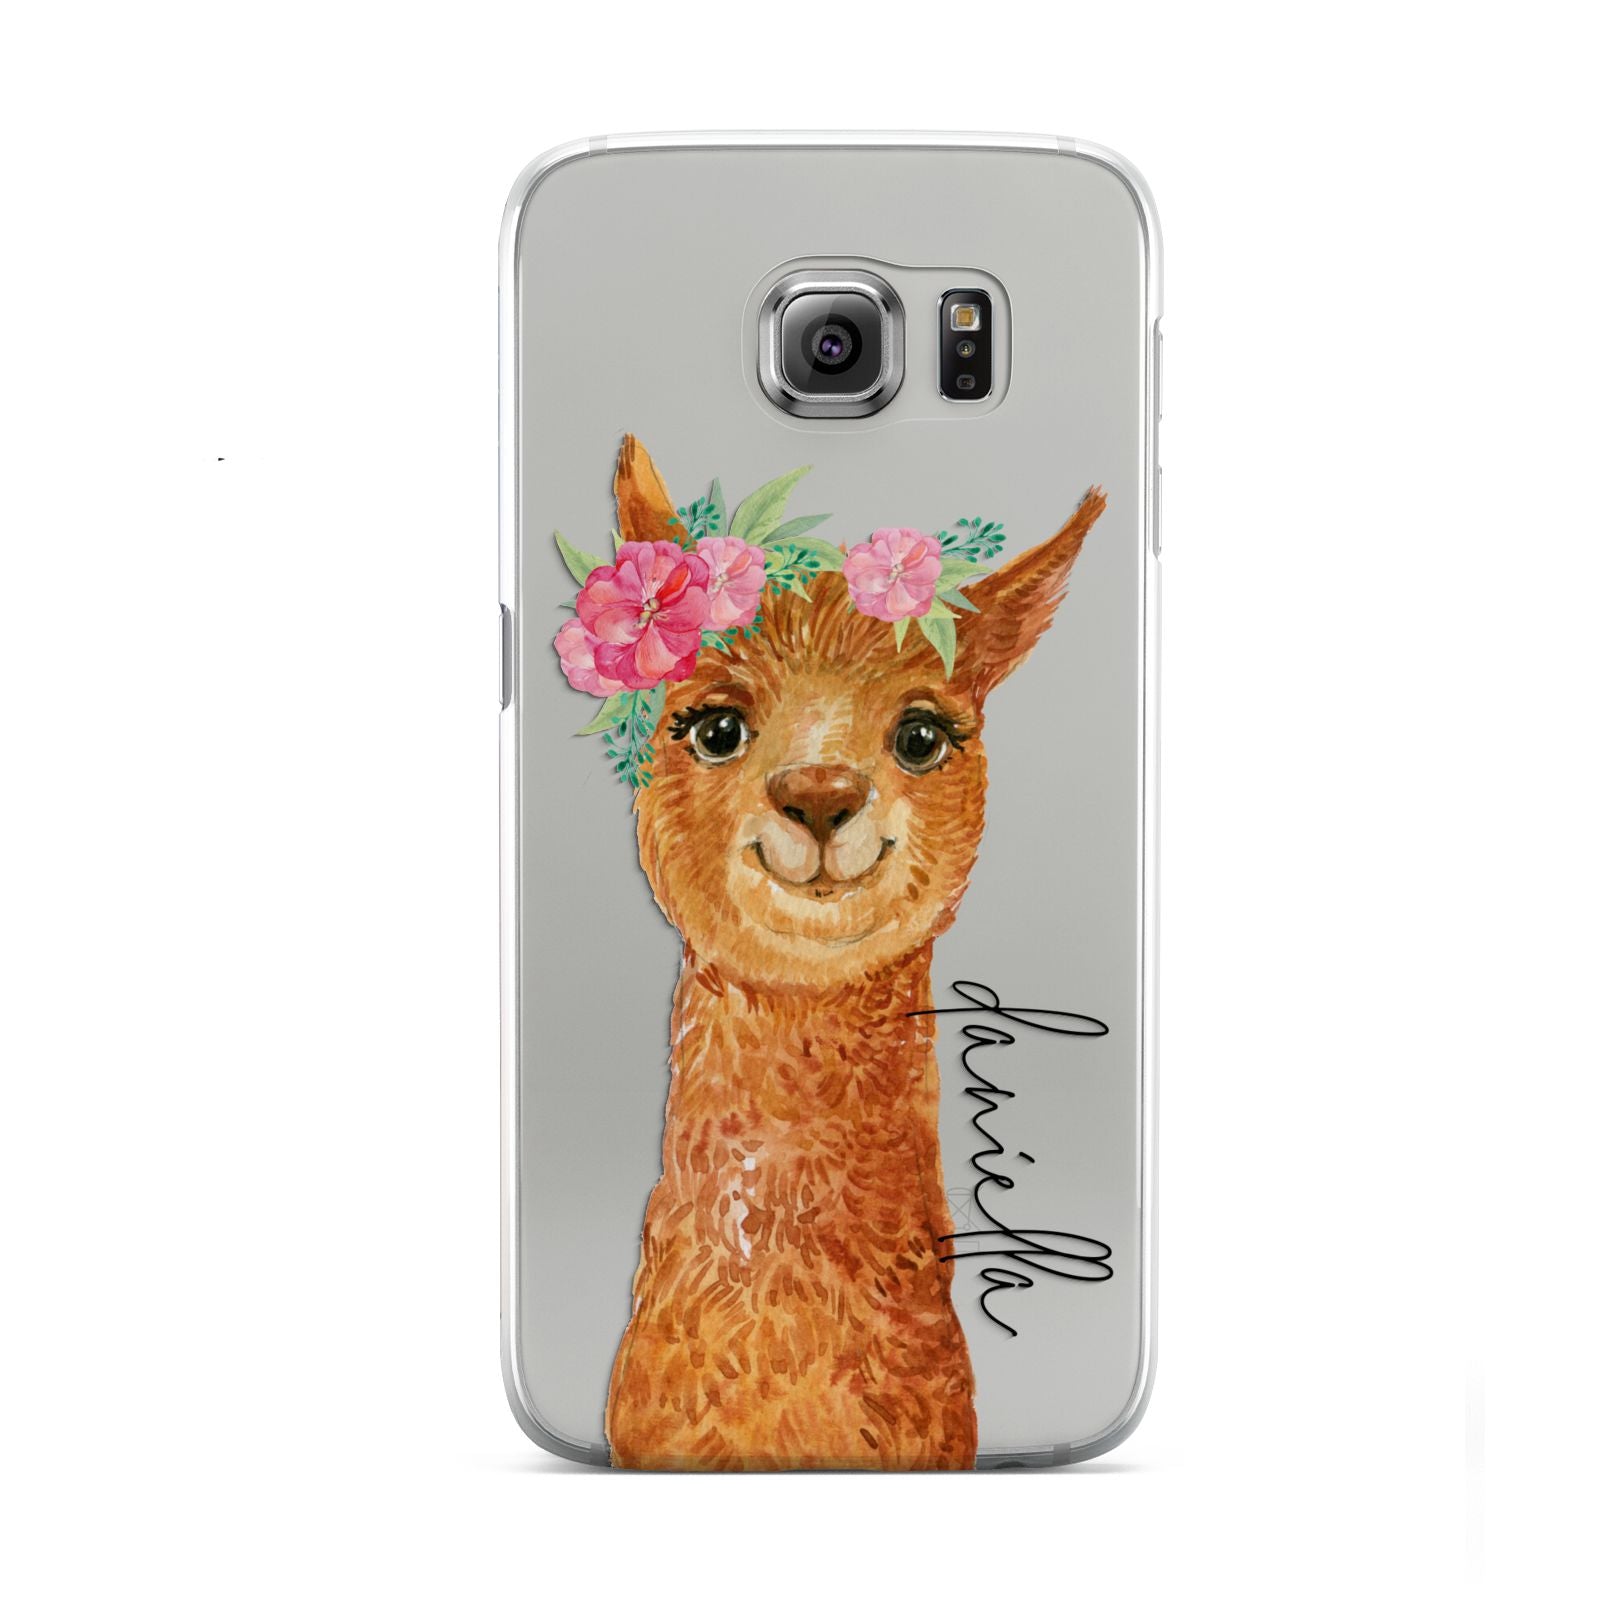 Personalised Llama Samsung Galaxy S6 Case